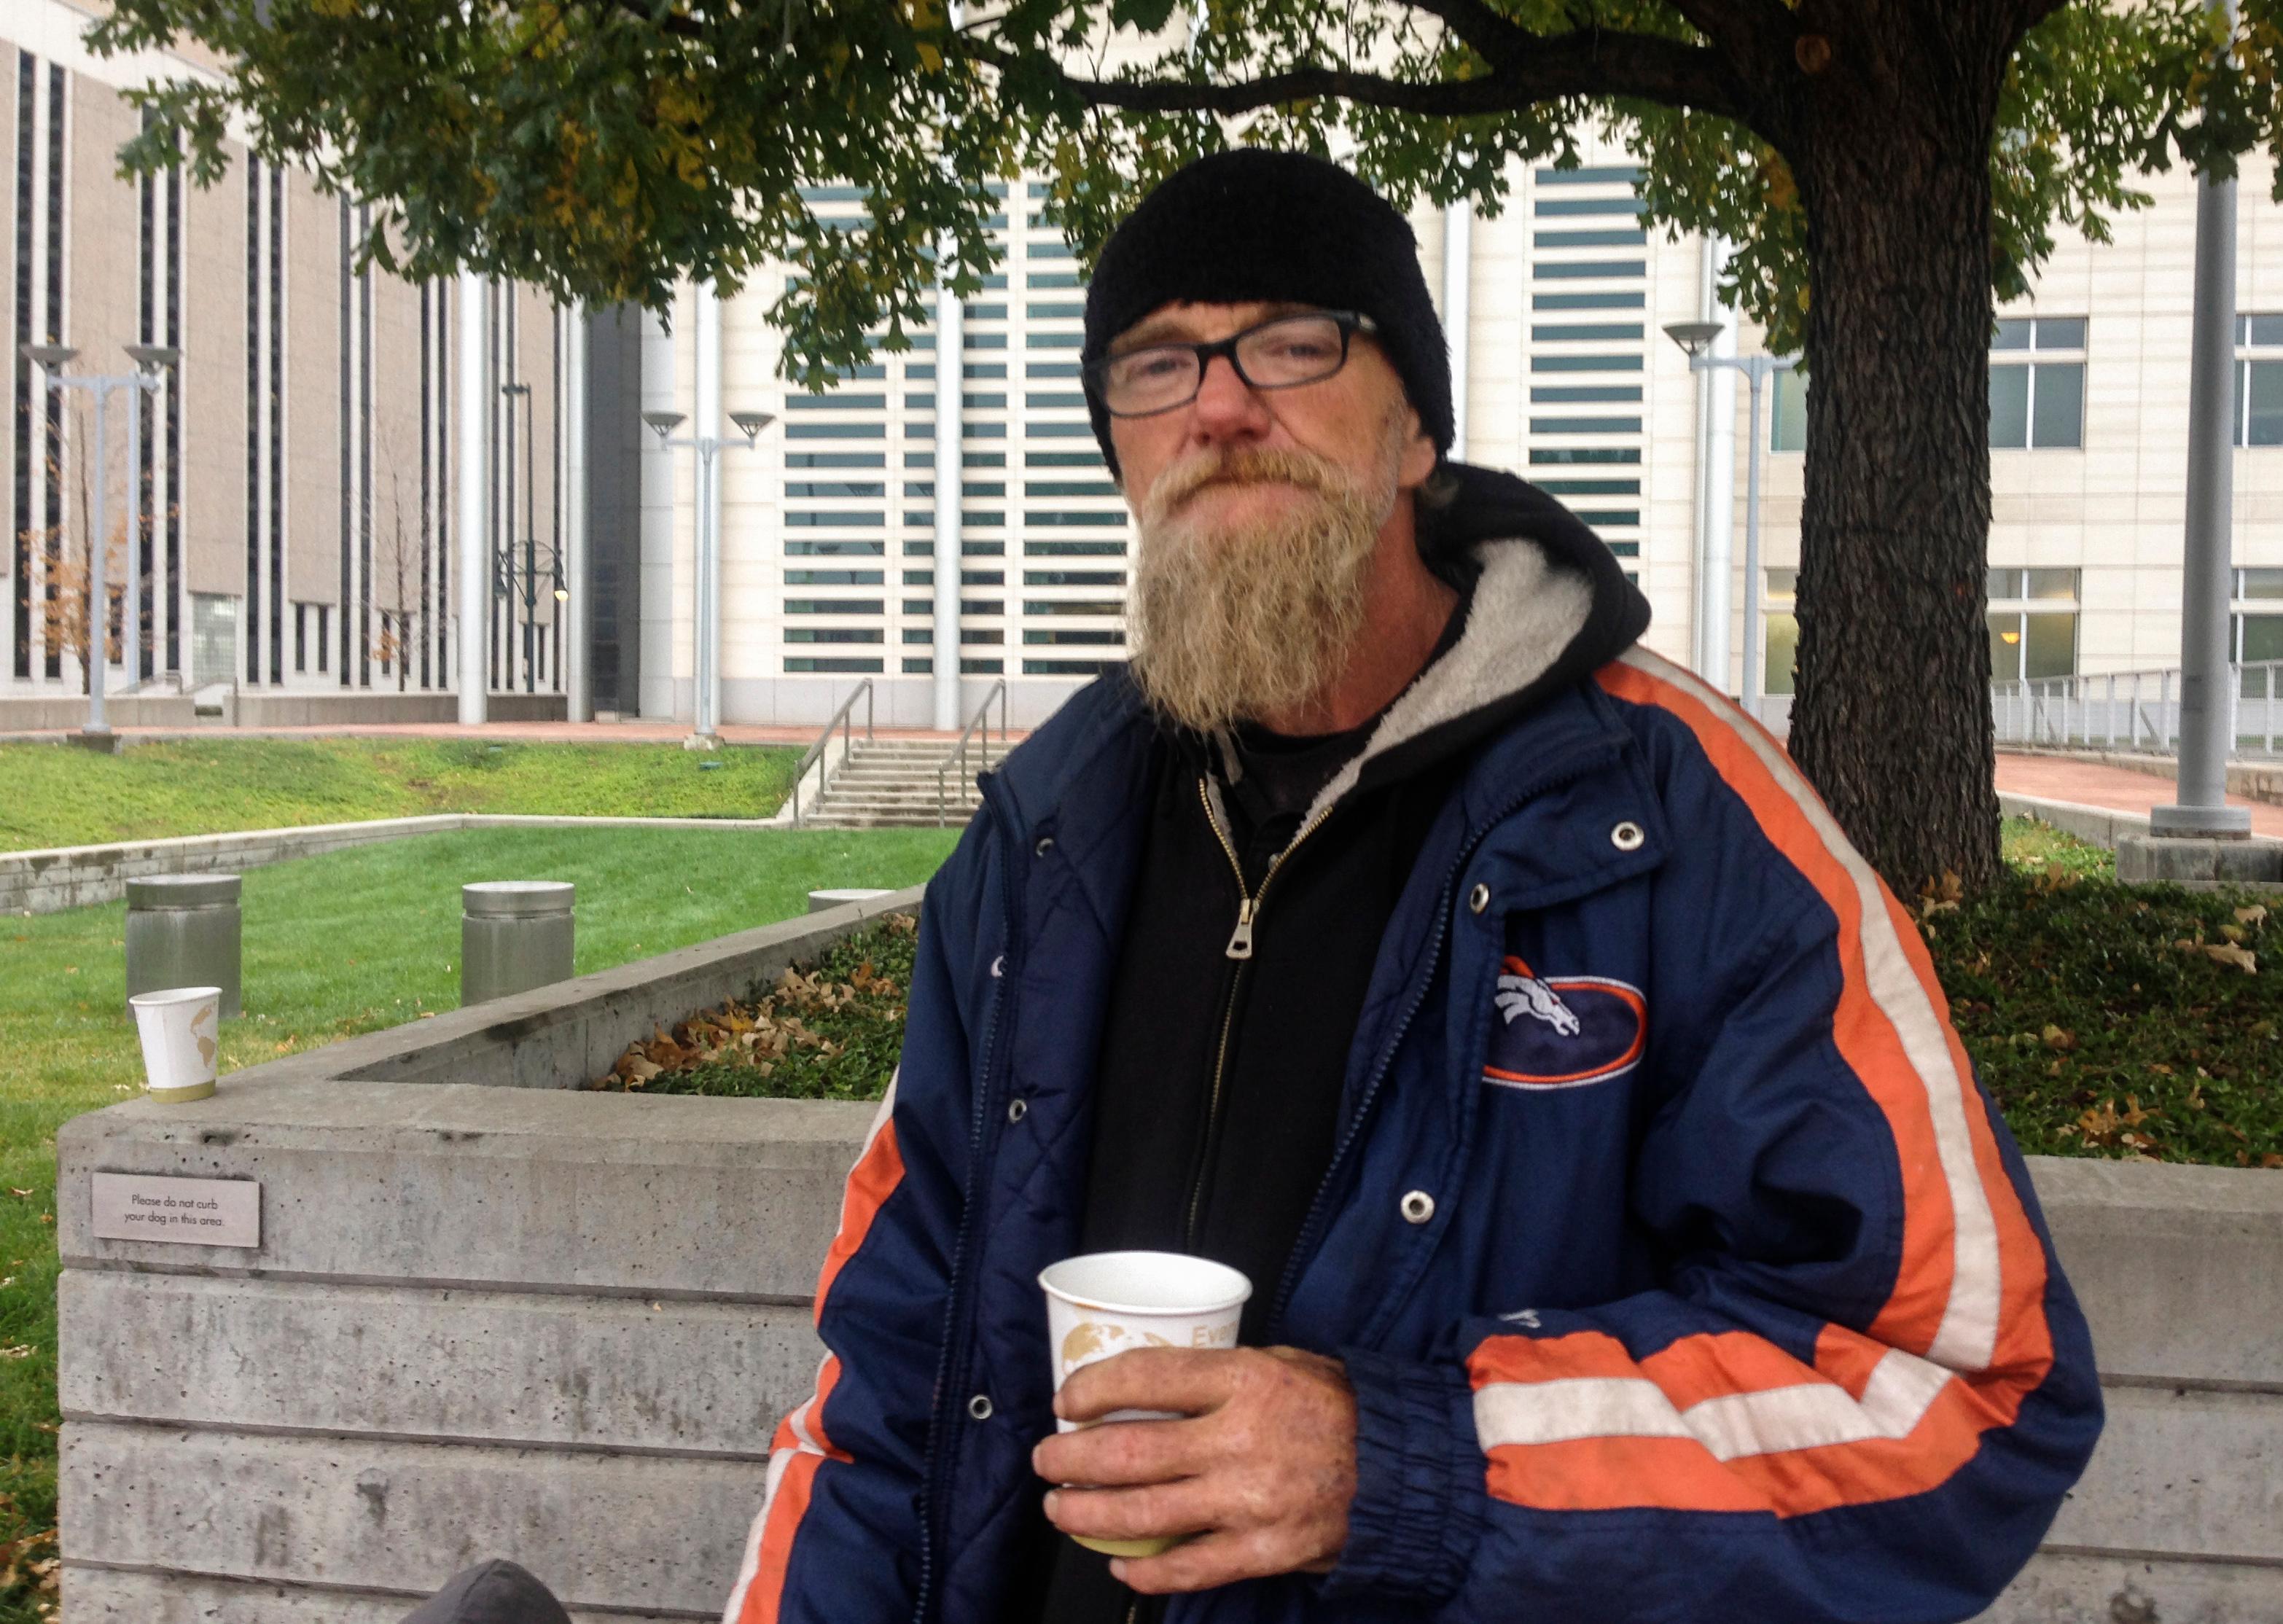 Photo: Garry Anderson, homeless plaintiff